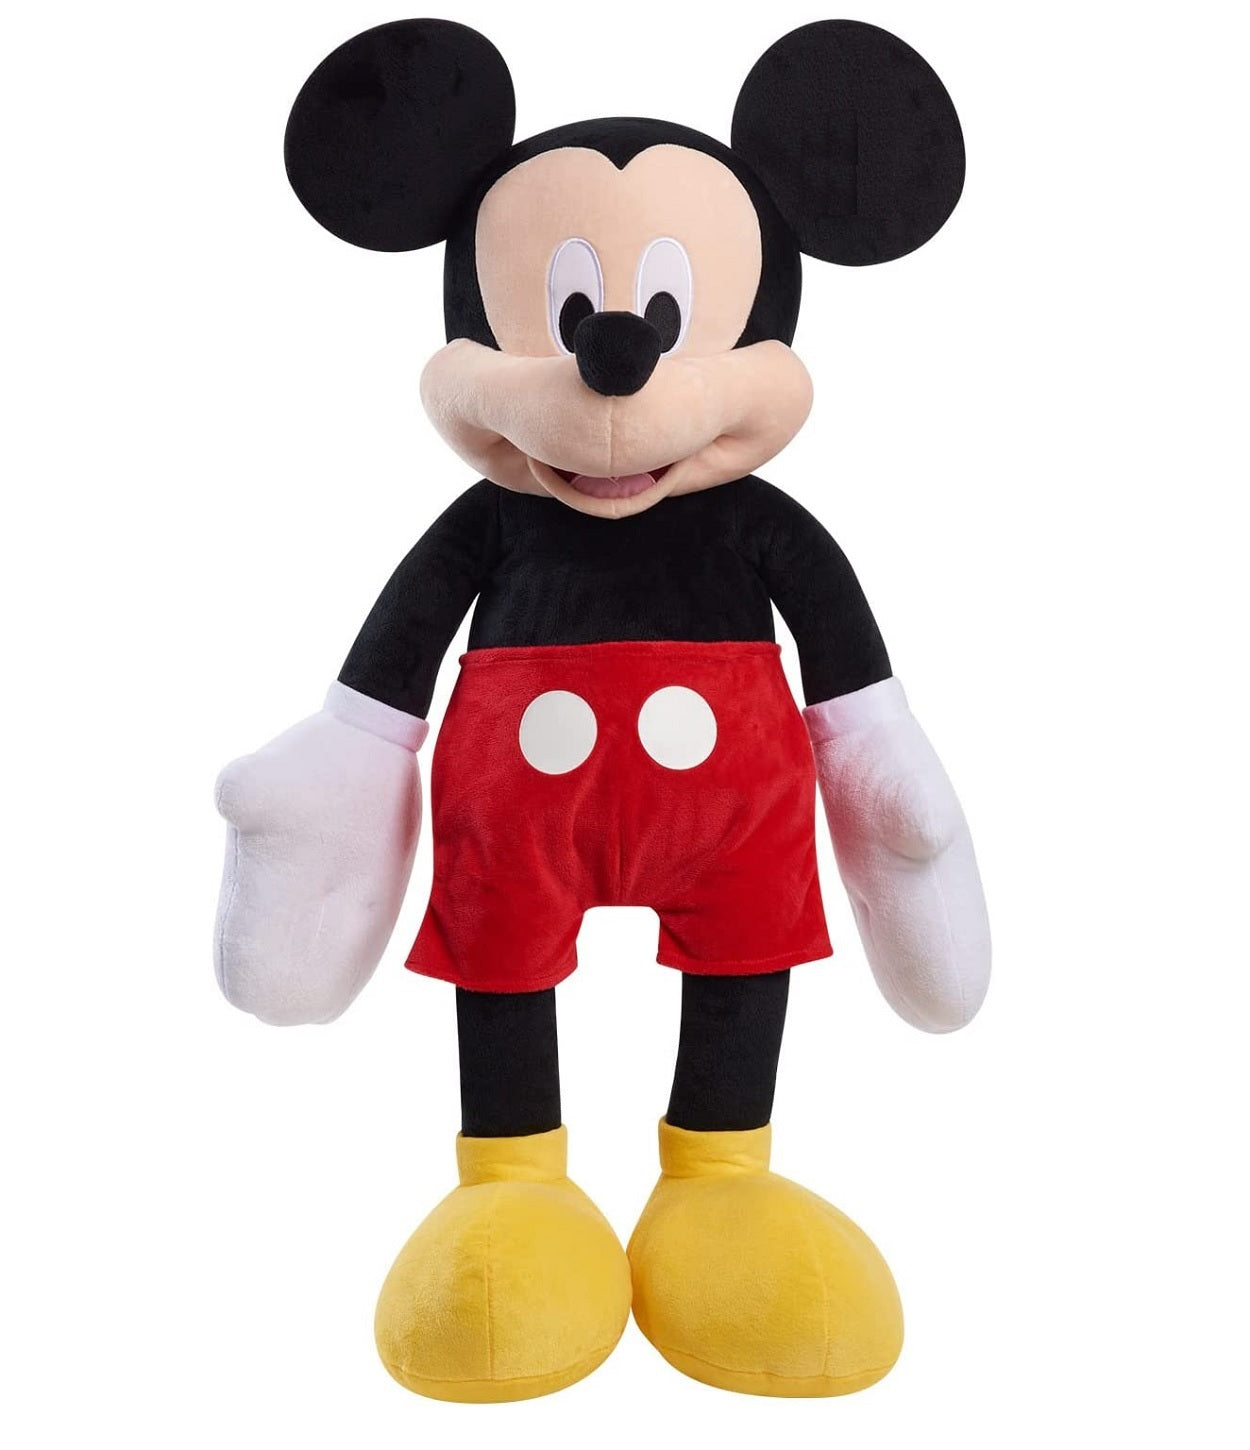 Disney Baby Mickey Mouse Jumbo Stuffed Animal Plush Toy - 40 Inches